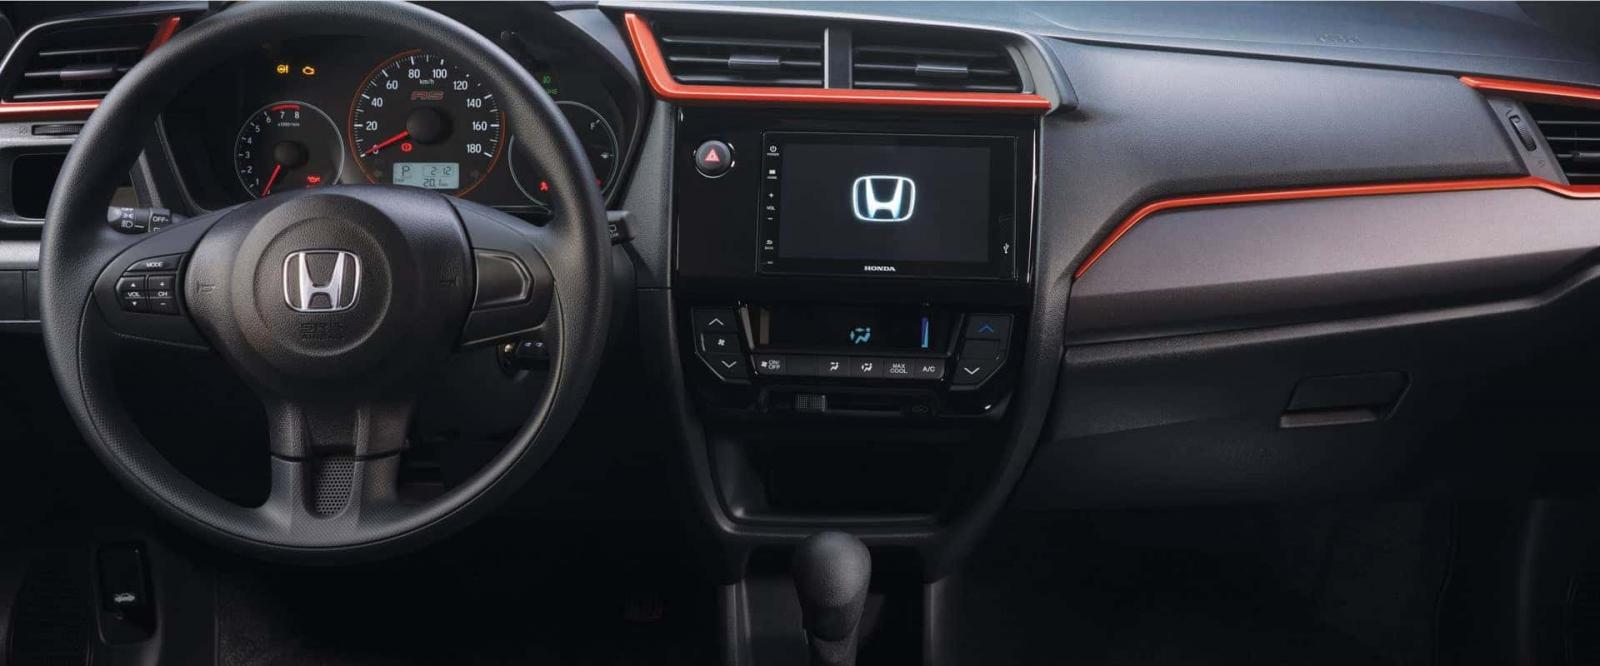 Honda Brio interior